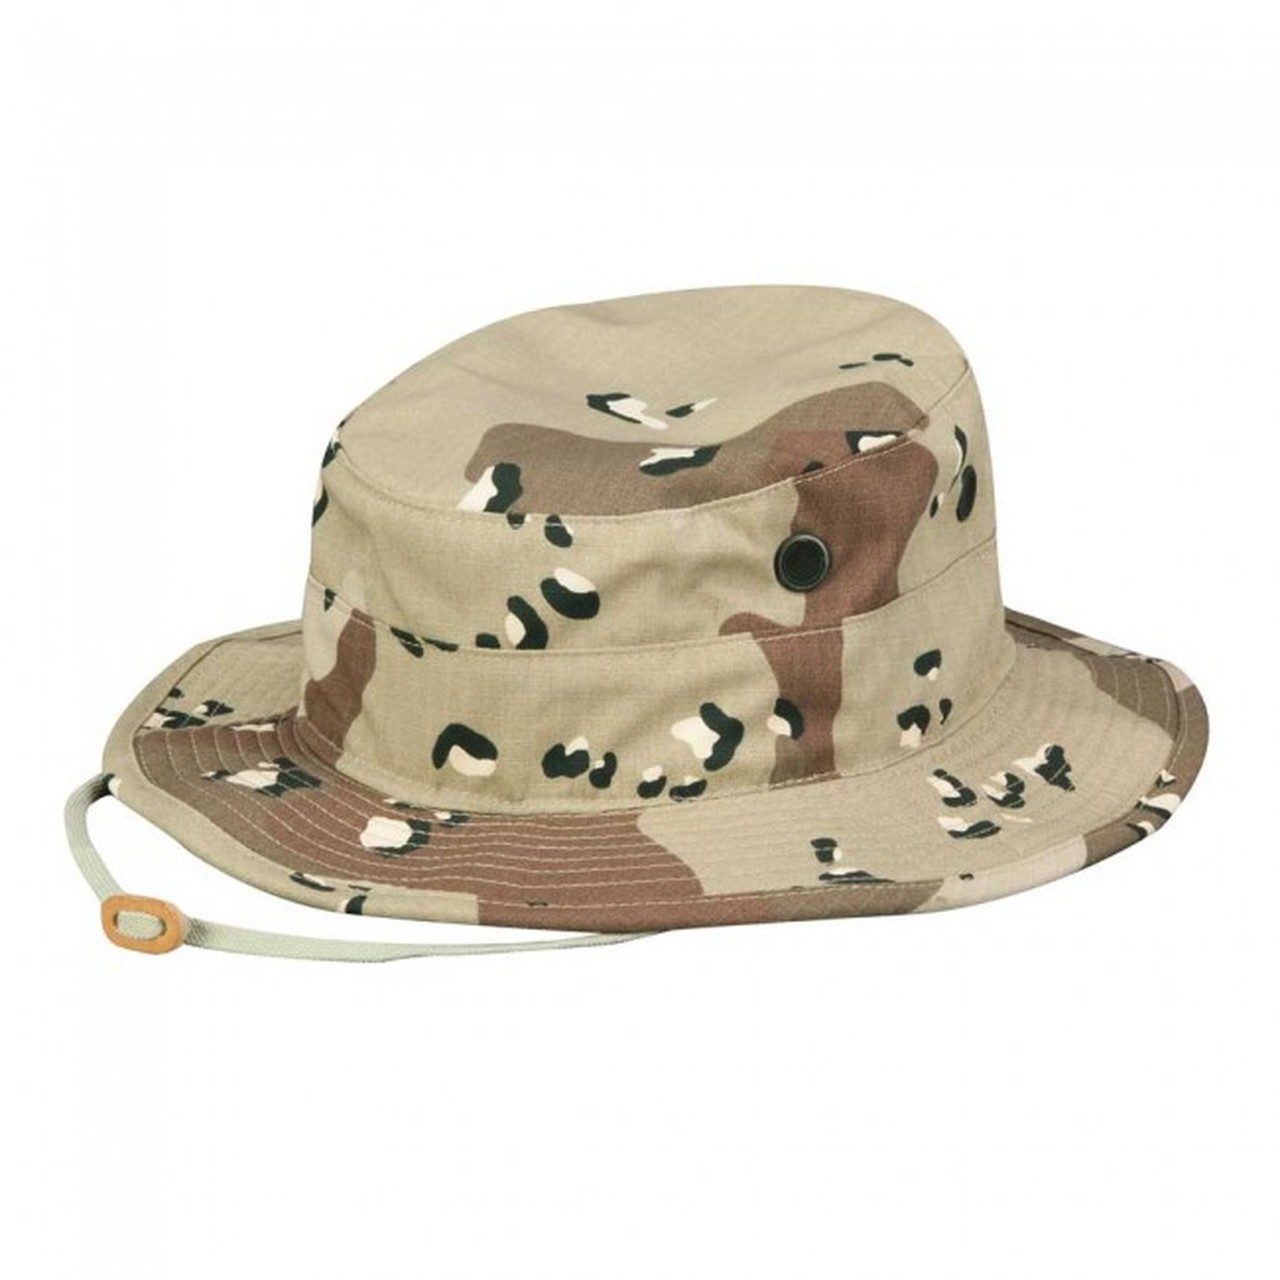 USMC Boonie Covers | Devil Dog Depot Marine Corps Boonie Hats